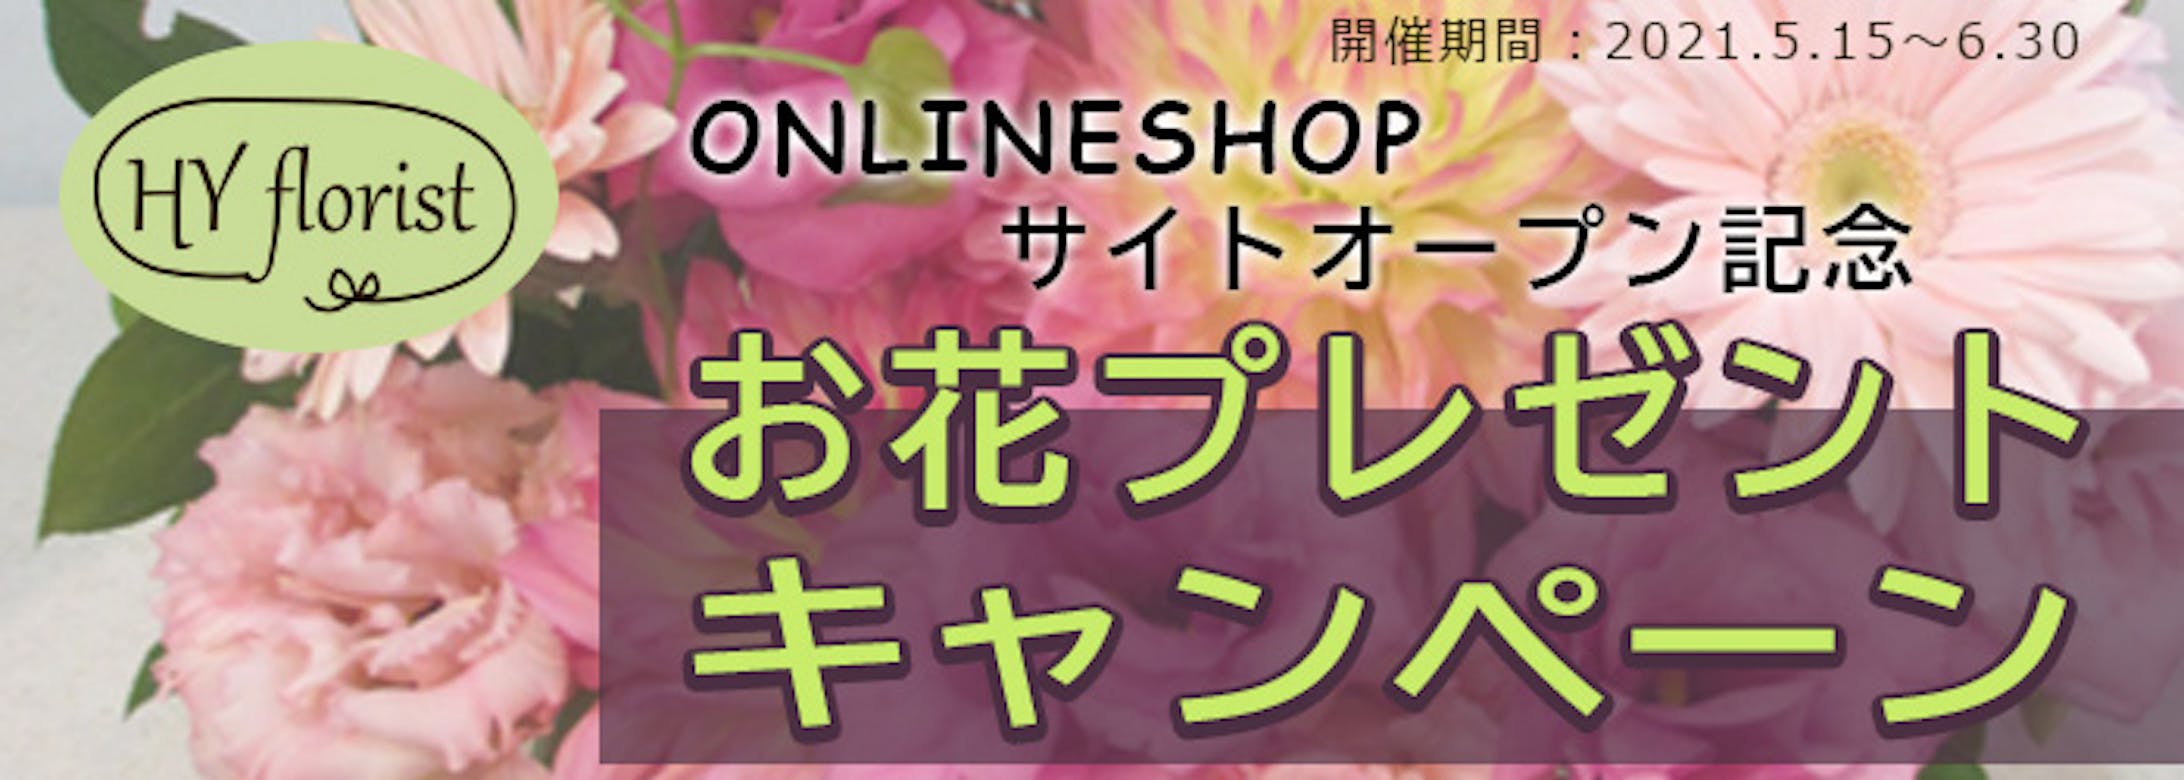 flowershop-banner02-1